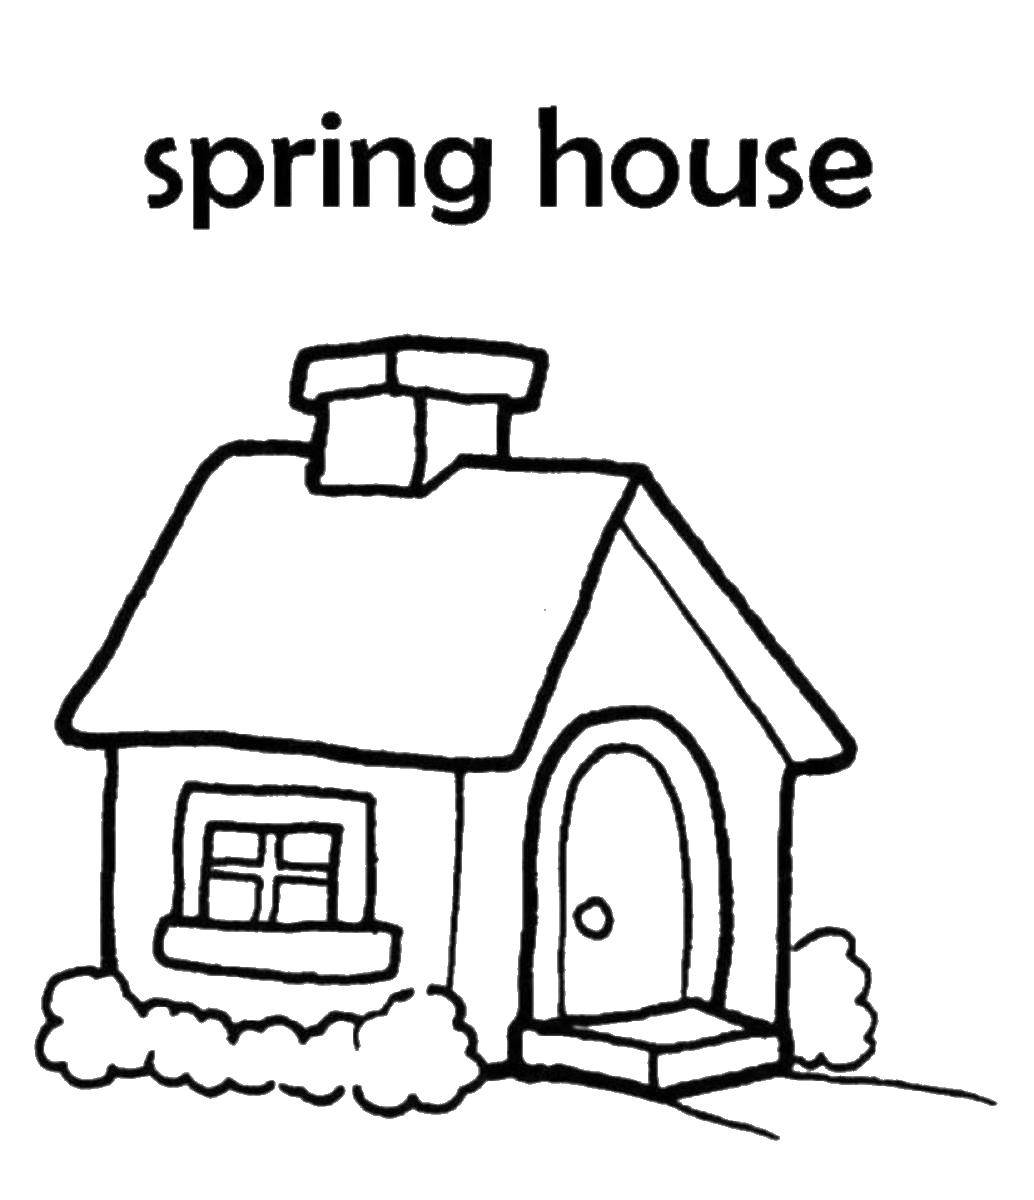 Название: Раскраска Весенний дом. Категория: Раскраски дом. Теги: дома, весна.